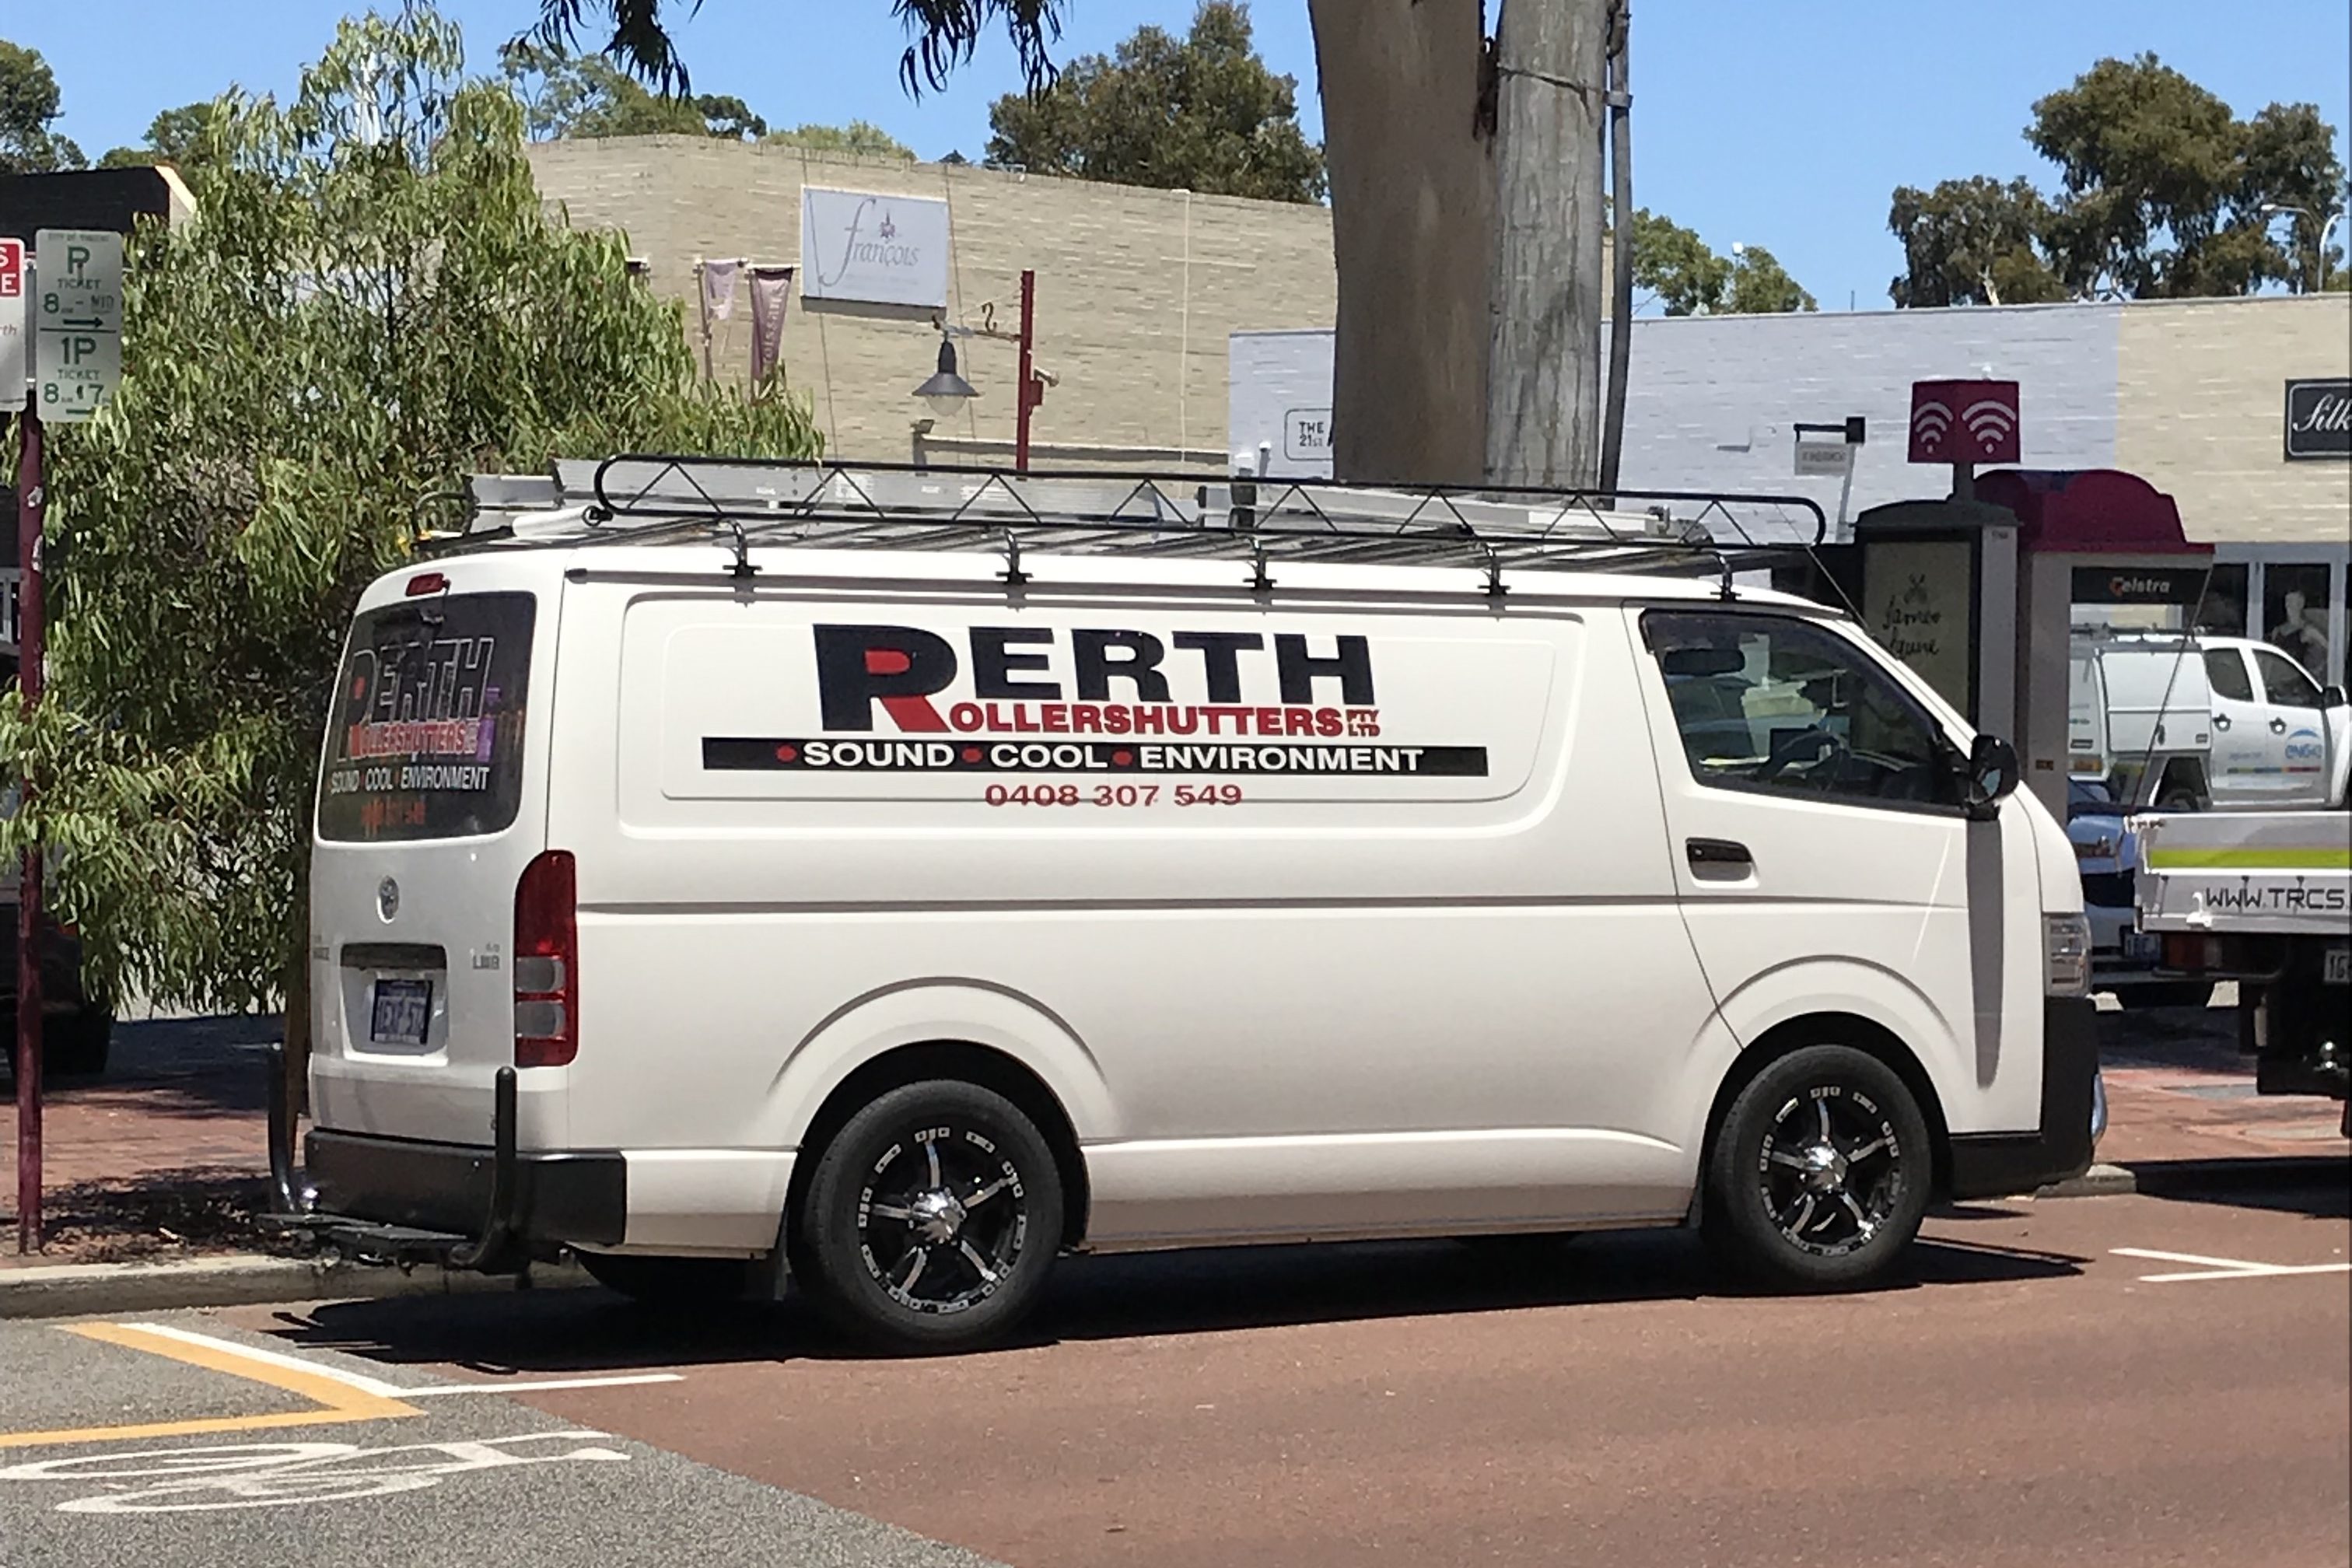 Perth Roller Shutters Service Van